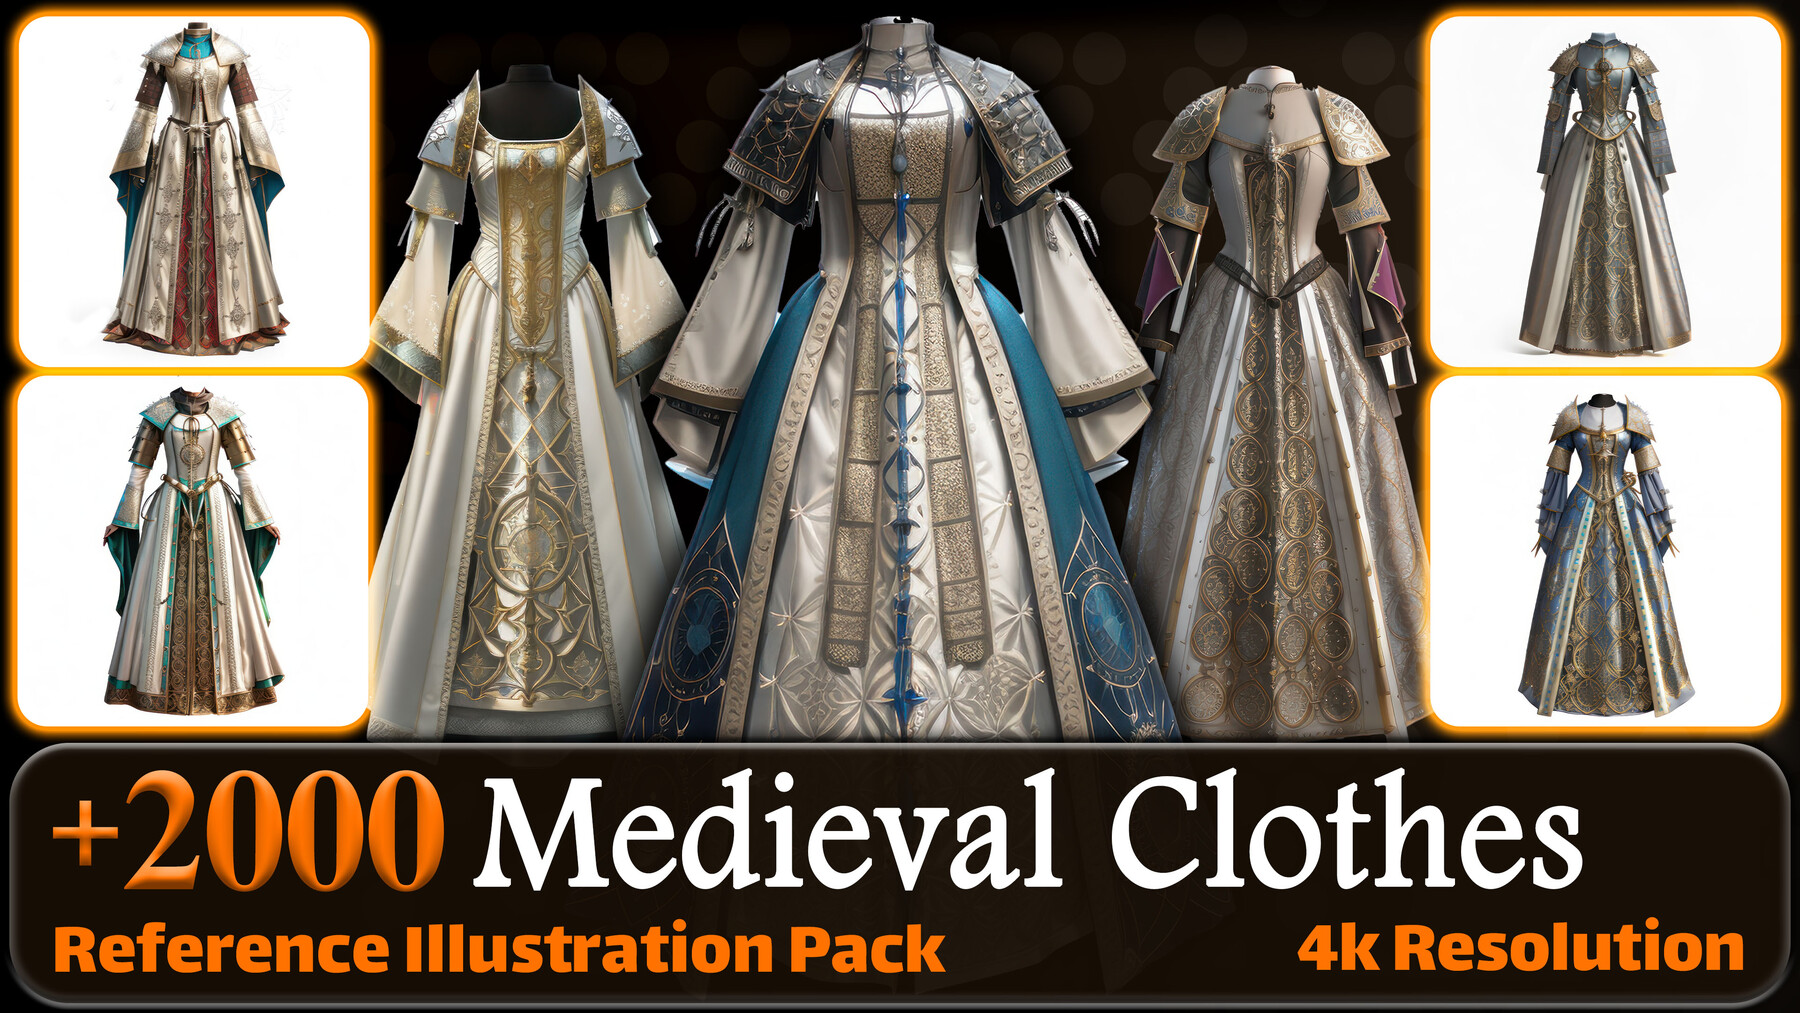 Medieval cloak with hood - Gordion 